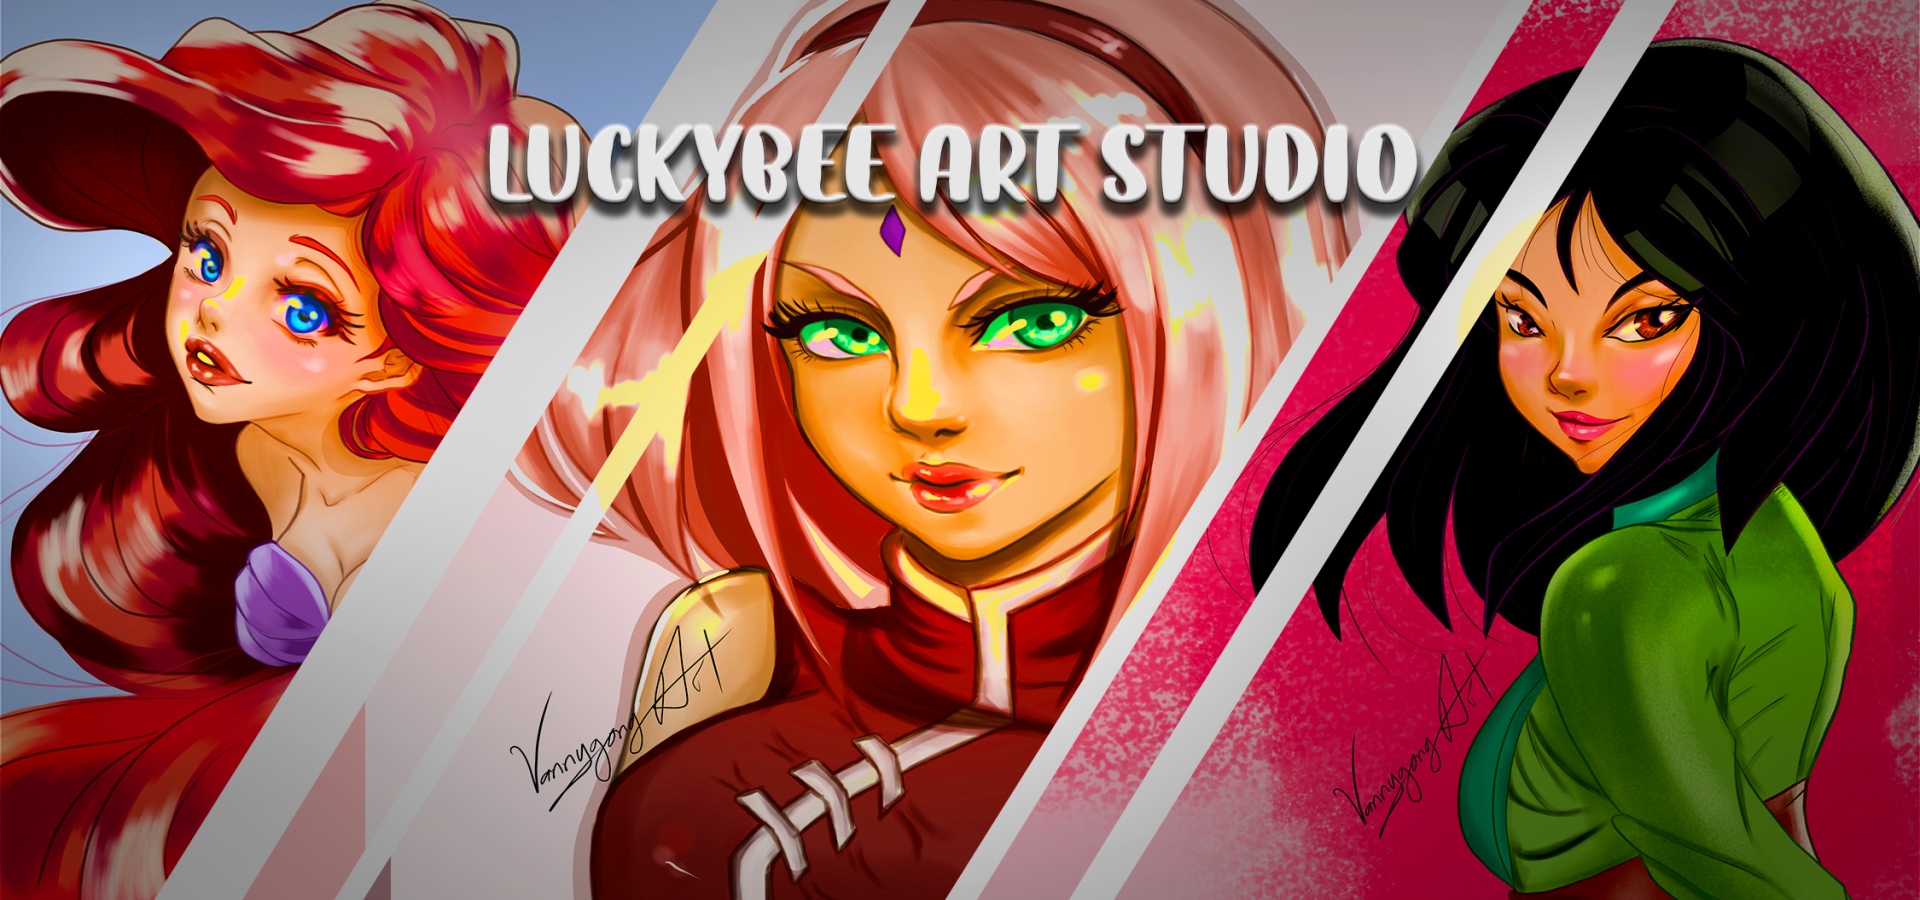 Luckybee Art Studio